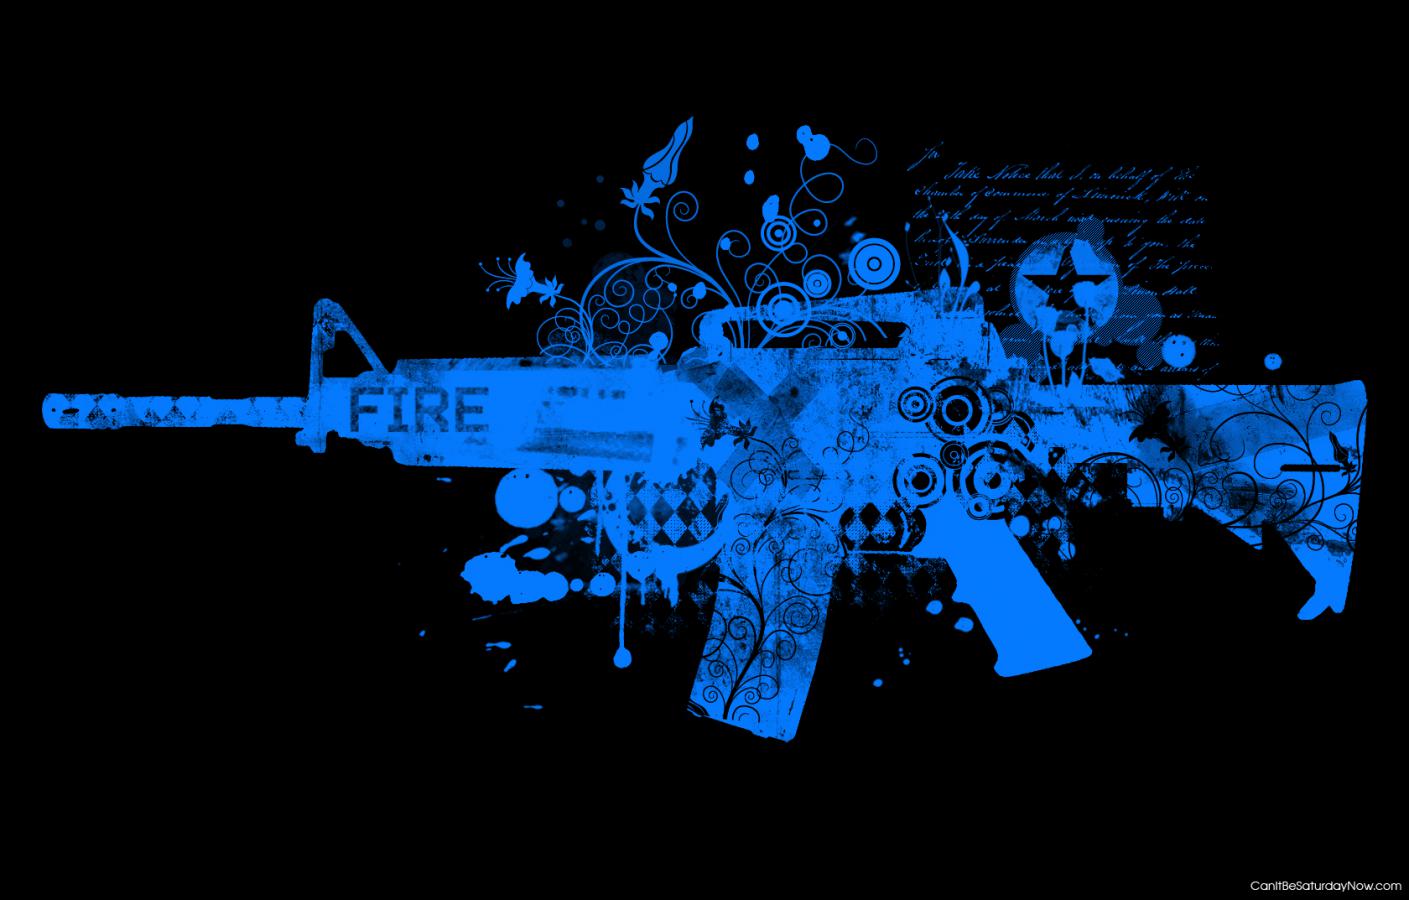 Blue flower gun - its a blue gun made with flowers and pain blobs